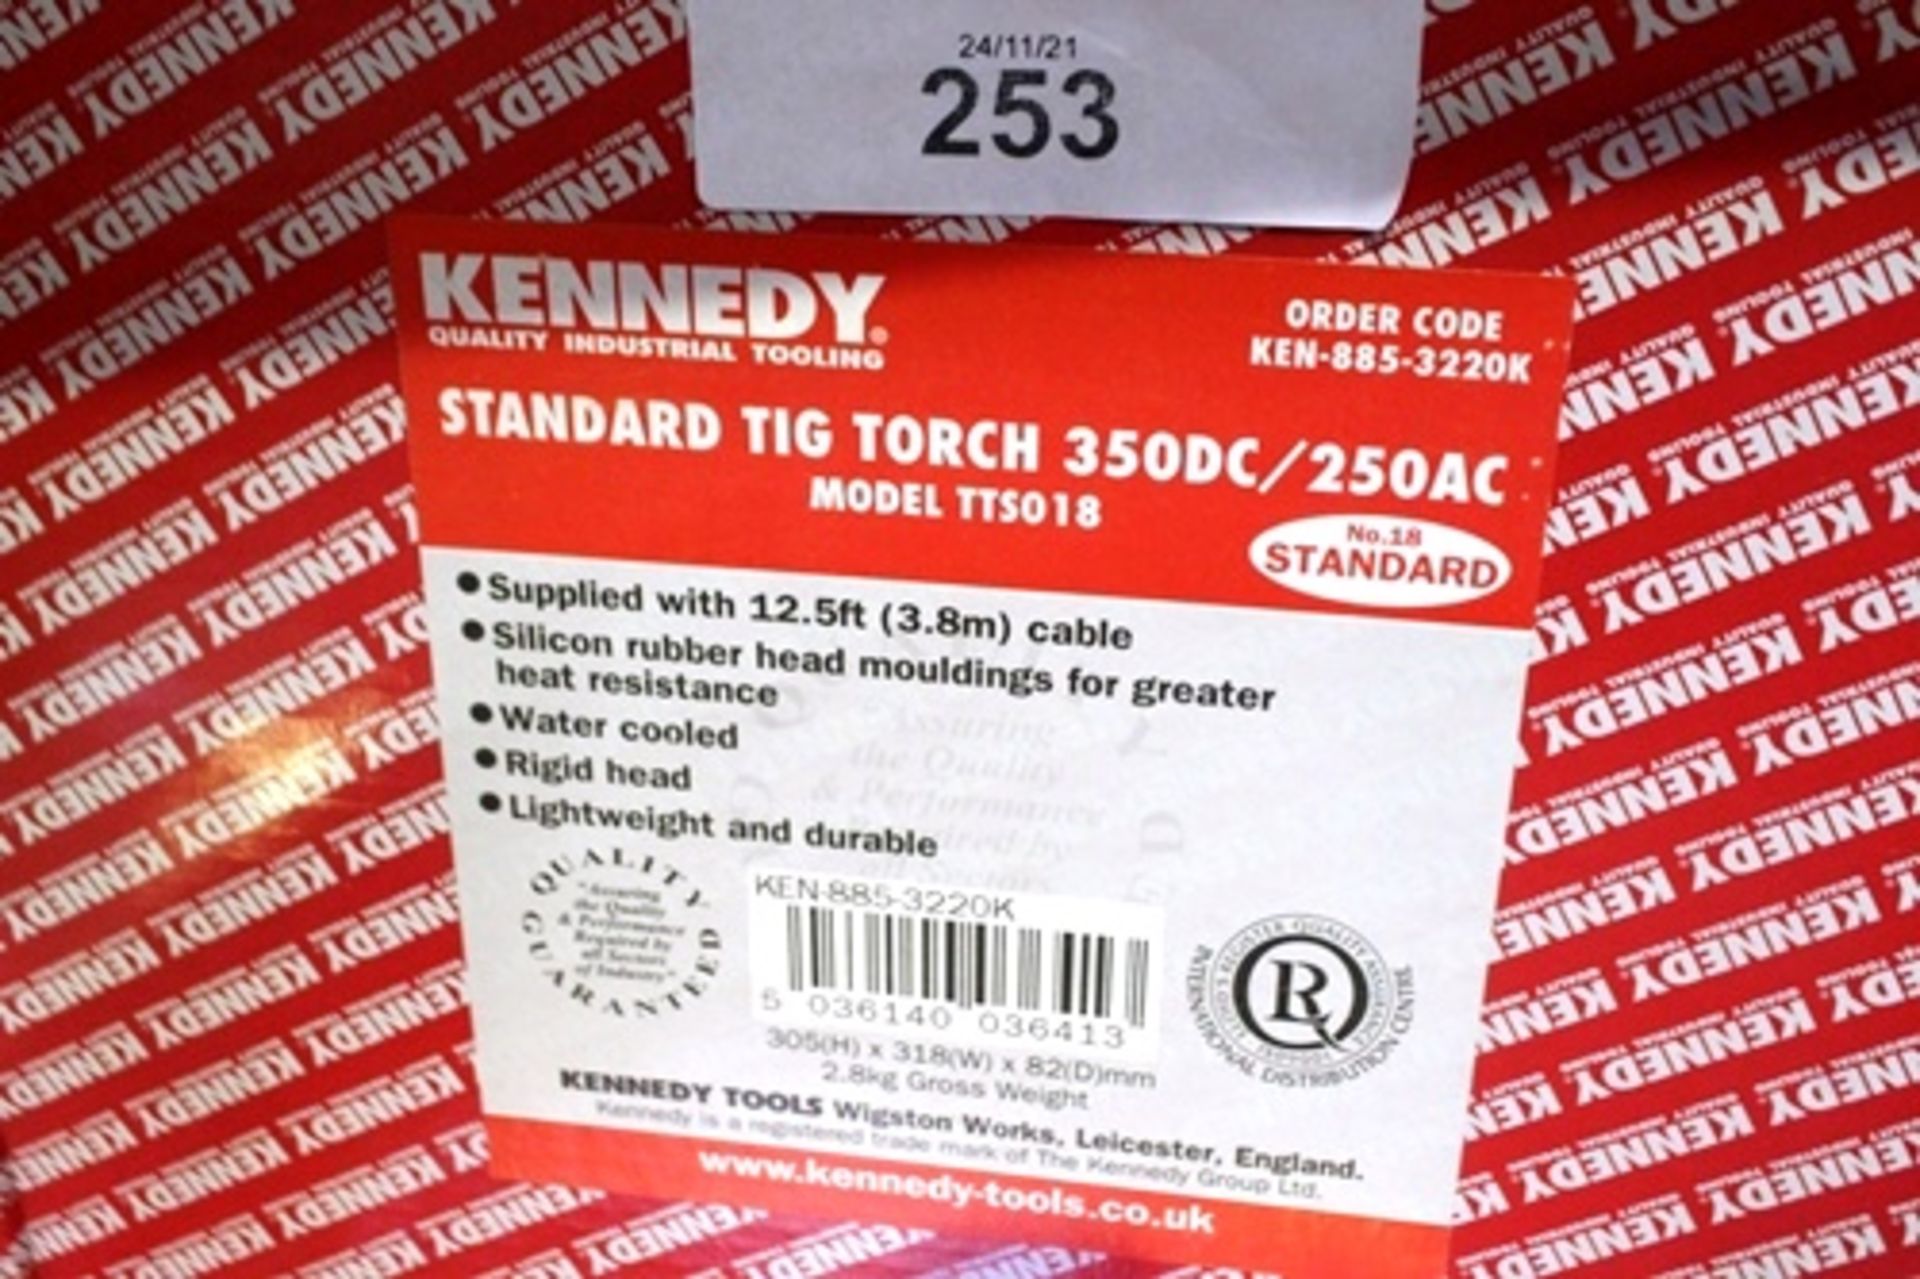 1 x Kennedy standard 350DC/250AC tig torch, model TTS018 - New in box (GS10)